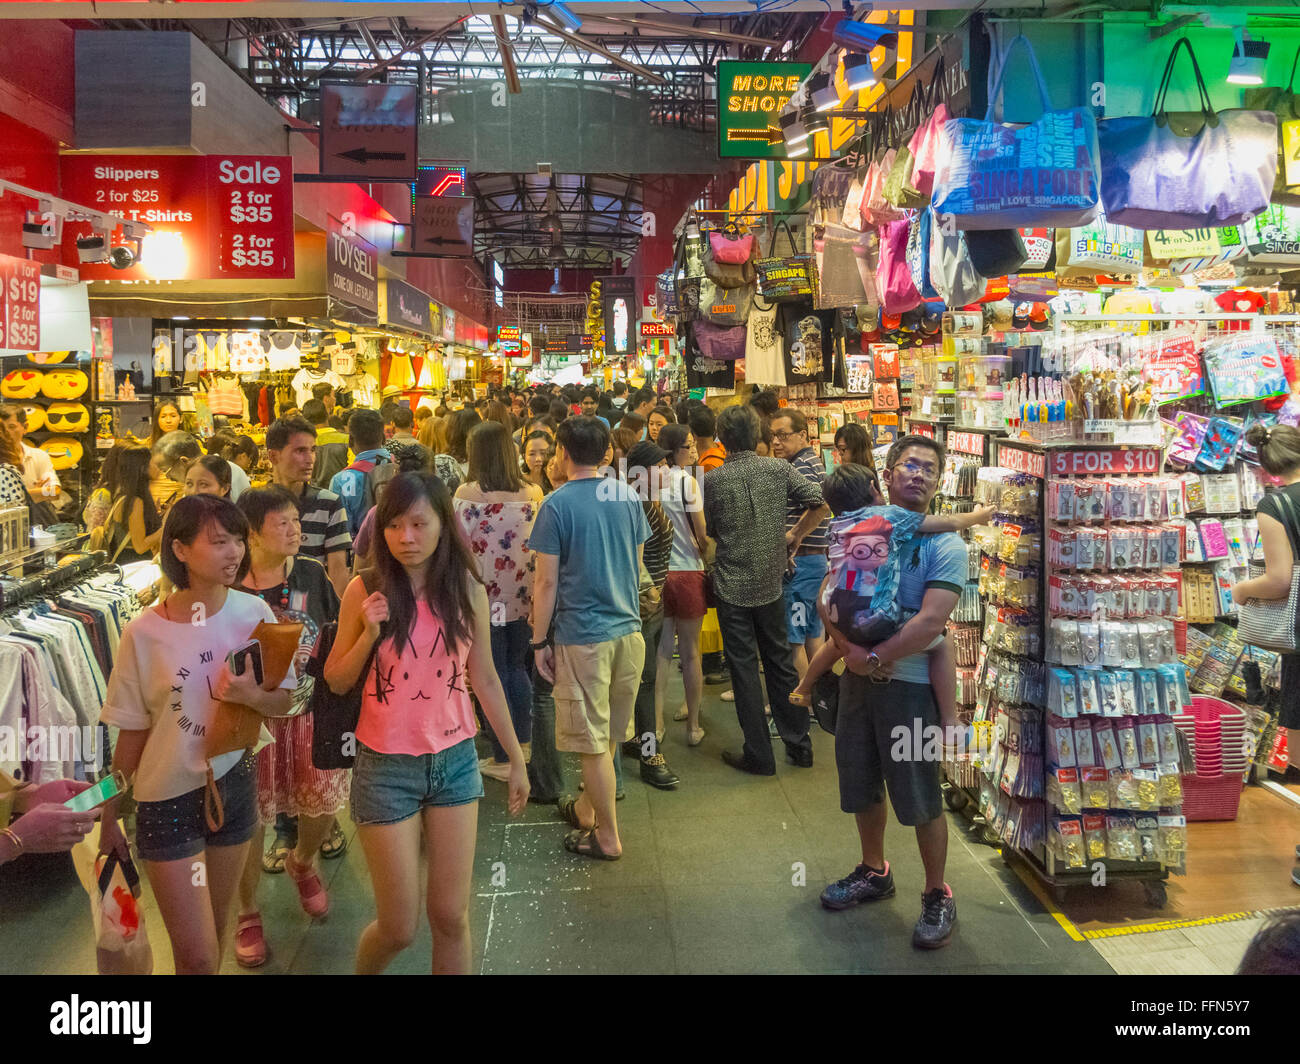 Kuala Lumpur - The famous Bugis Street Market in Kuala Lumpur, Malaysia with people shopping at the market stalls Stock Photo